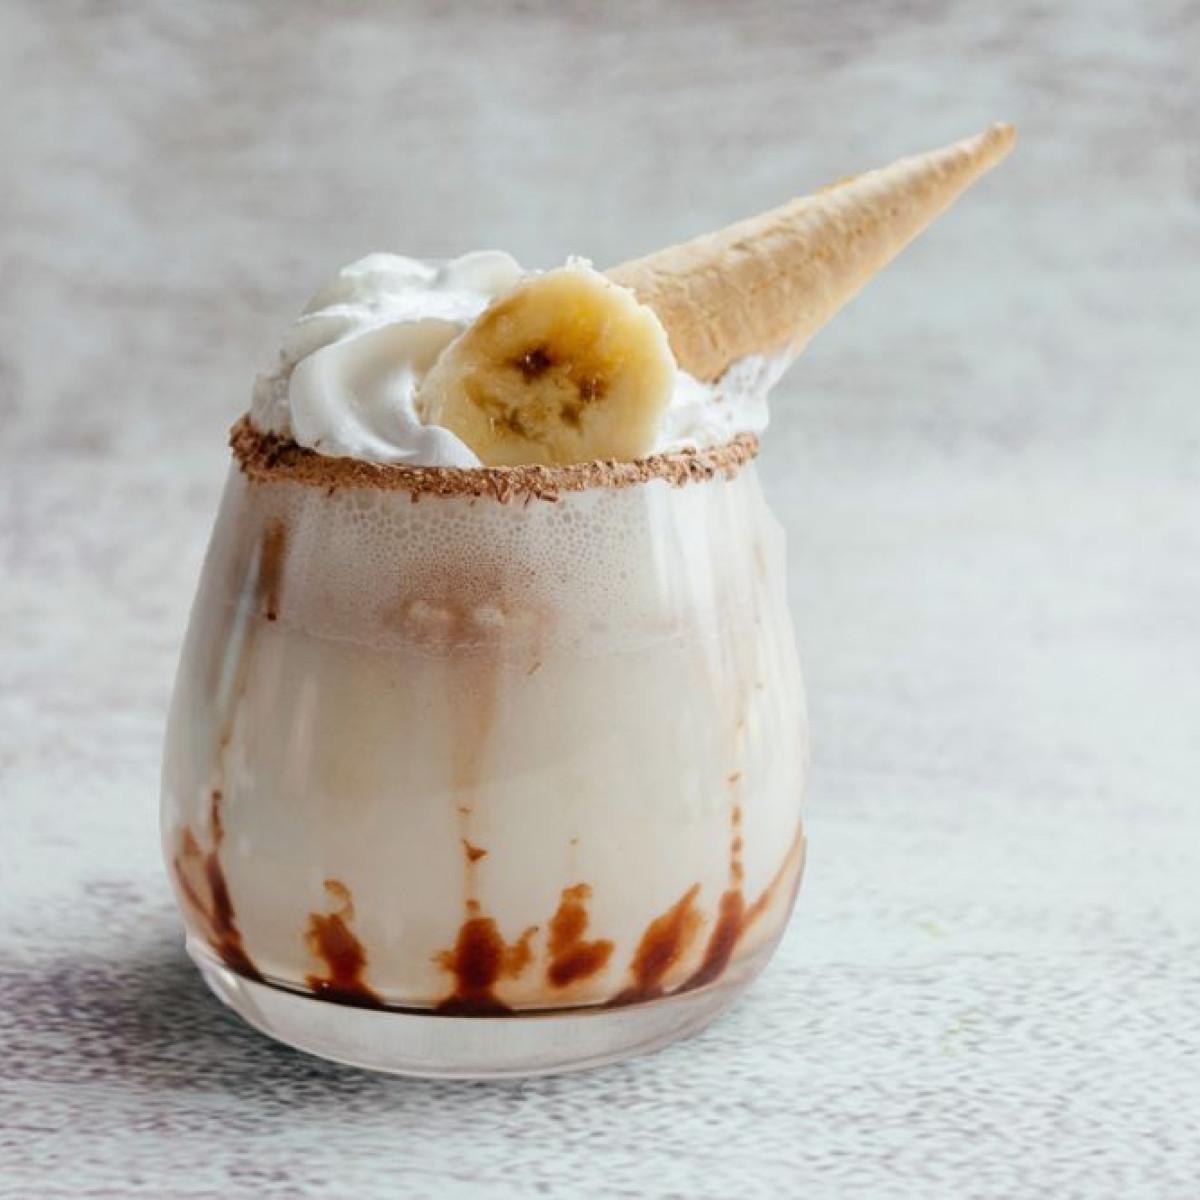 Мороженое банановое. Украшение из банана на коктейль. Банановое мороженое с карамелью. Коктейль мороженое банан.